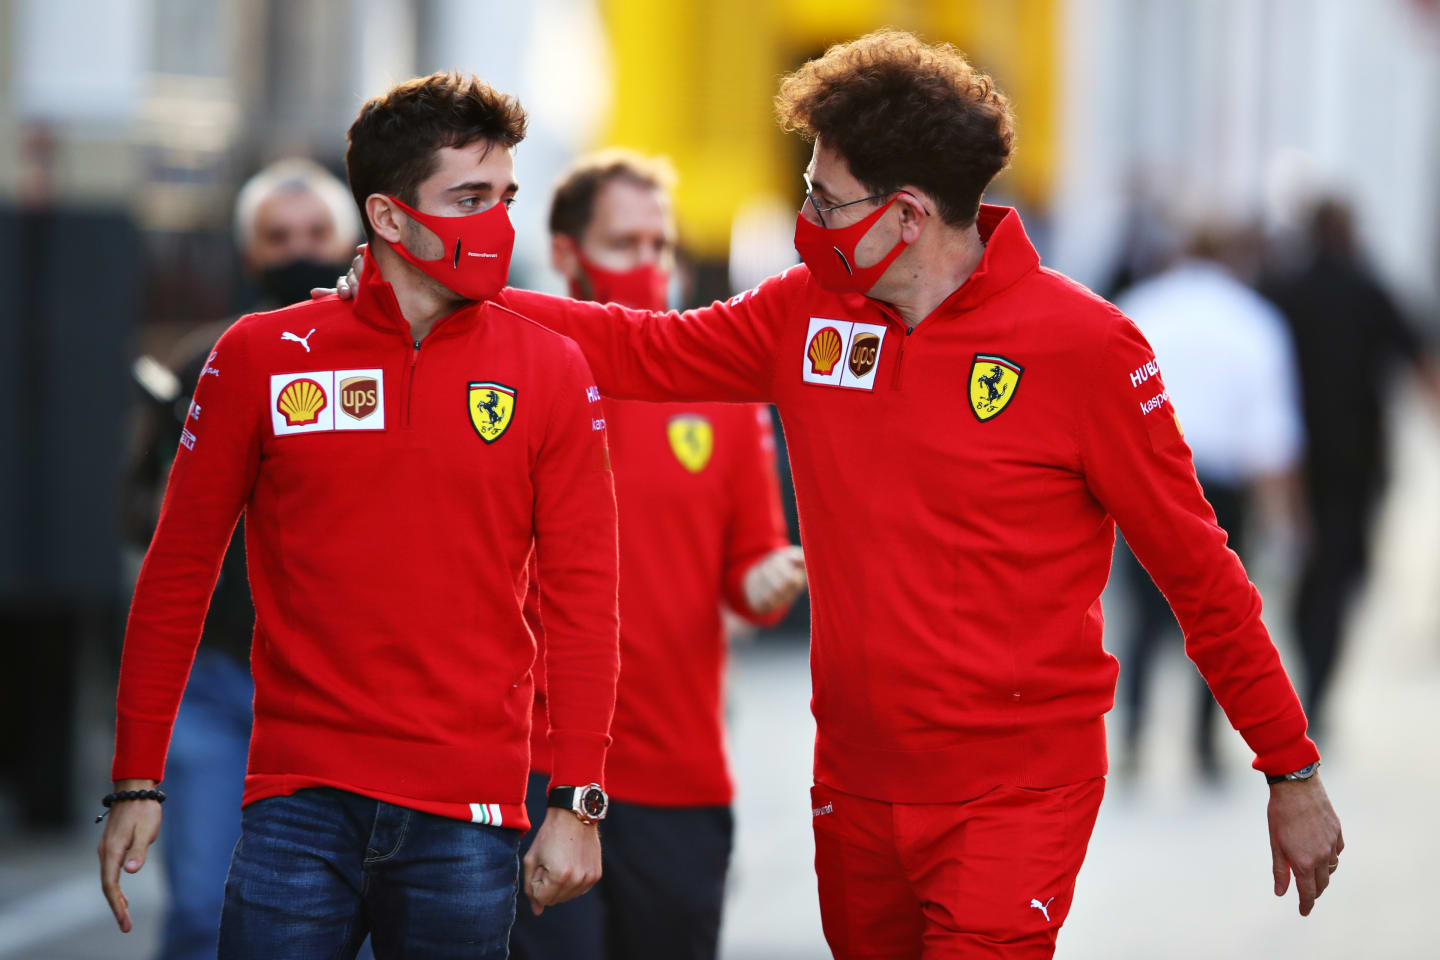 IMOLA, ITALY - OCTOBER 30: Scuderia Ferrari Team Principal Mattia Binotto embraces Charles Leclerc